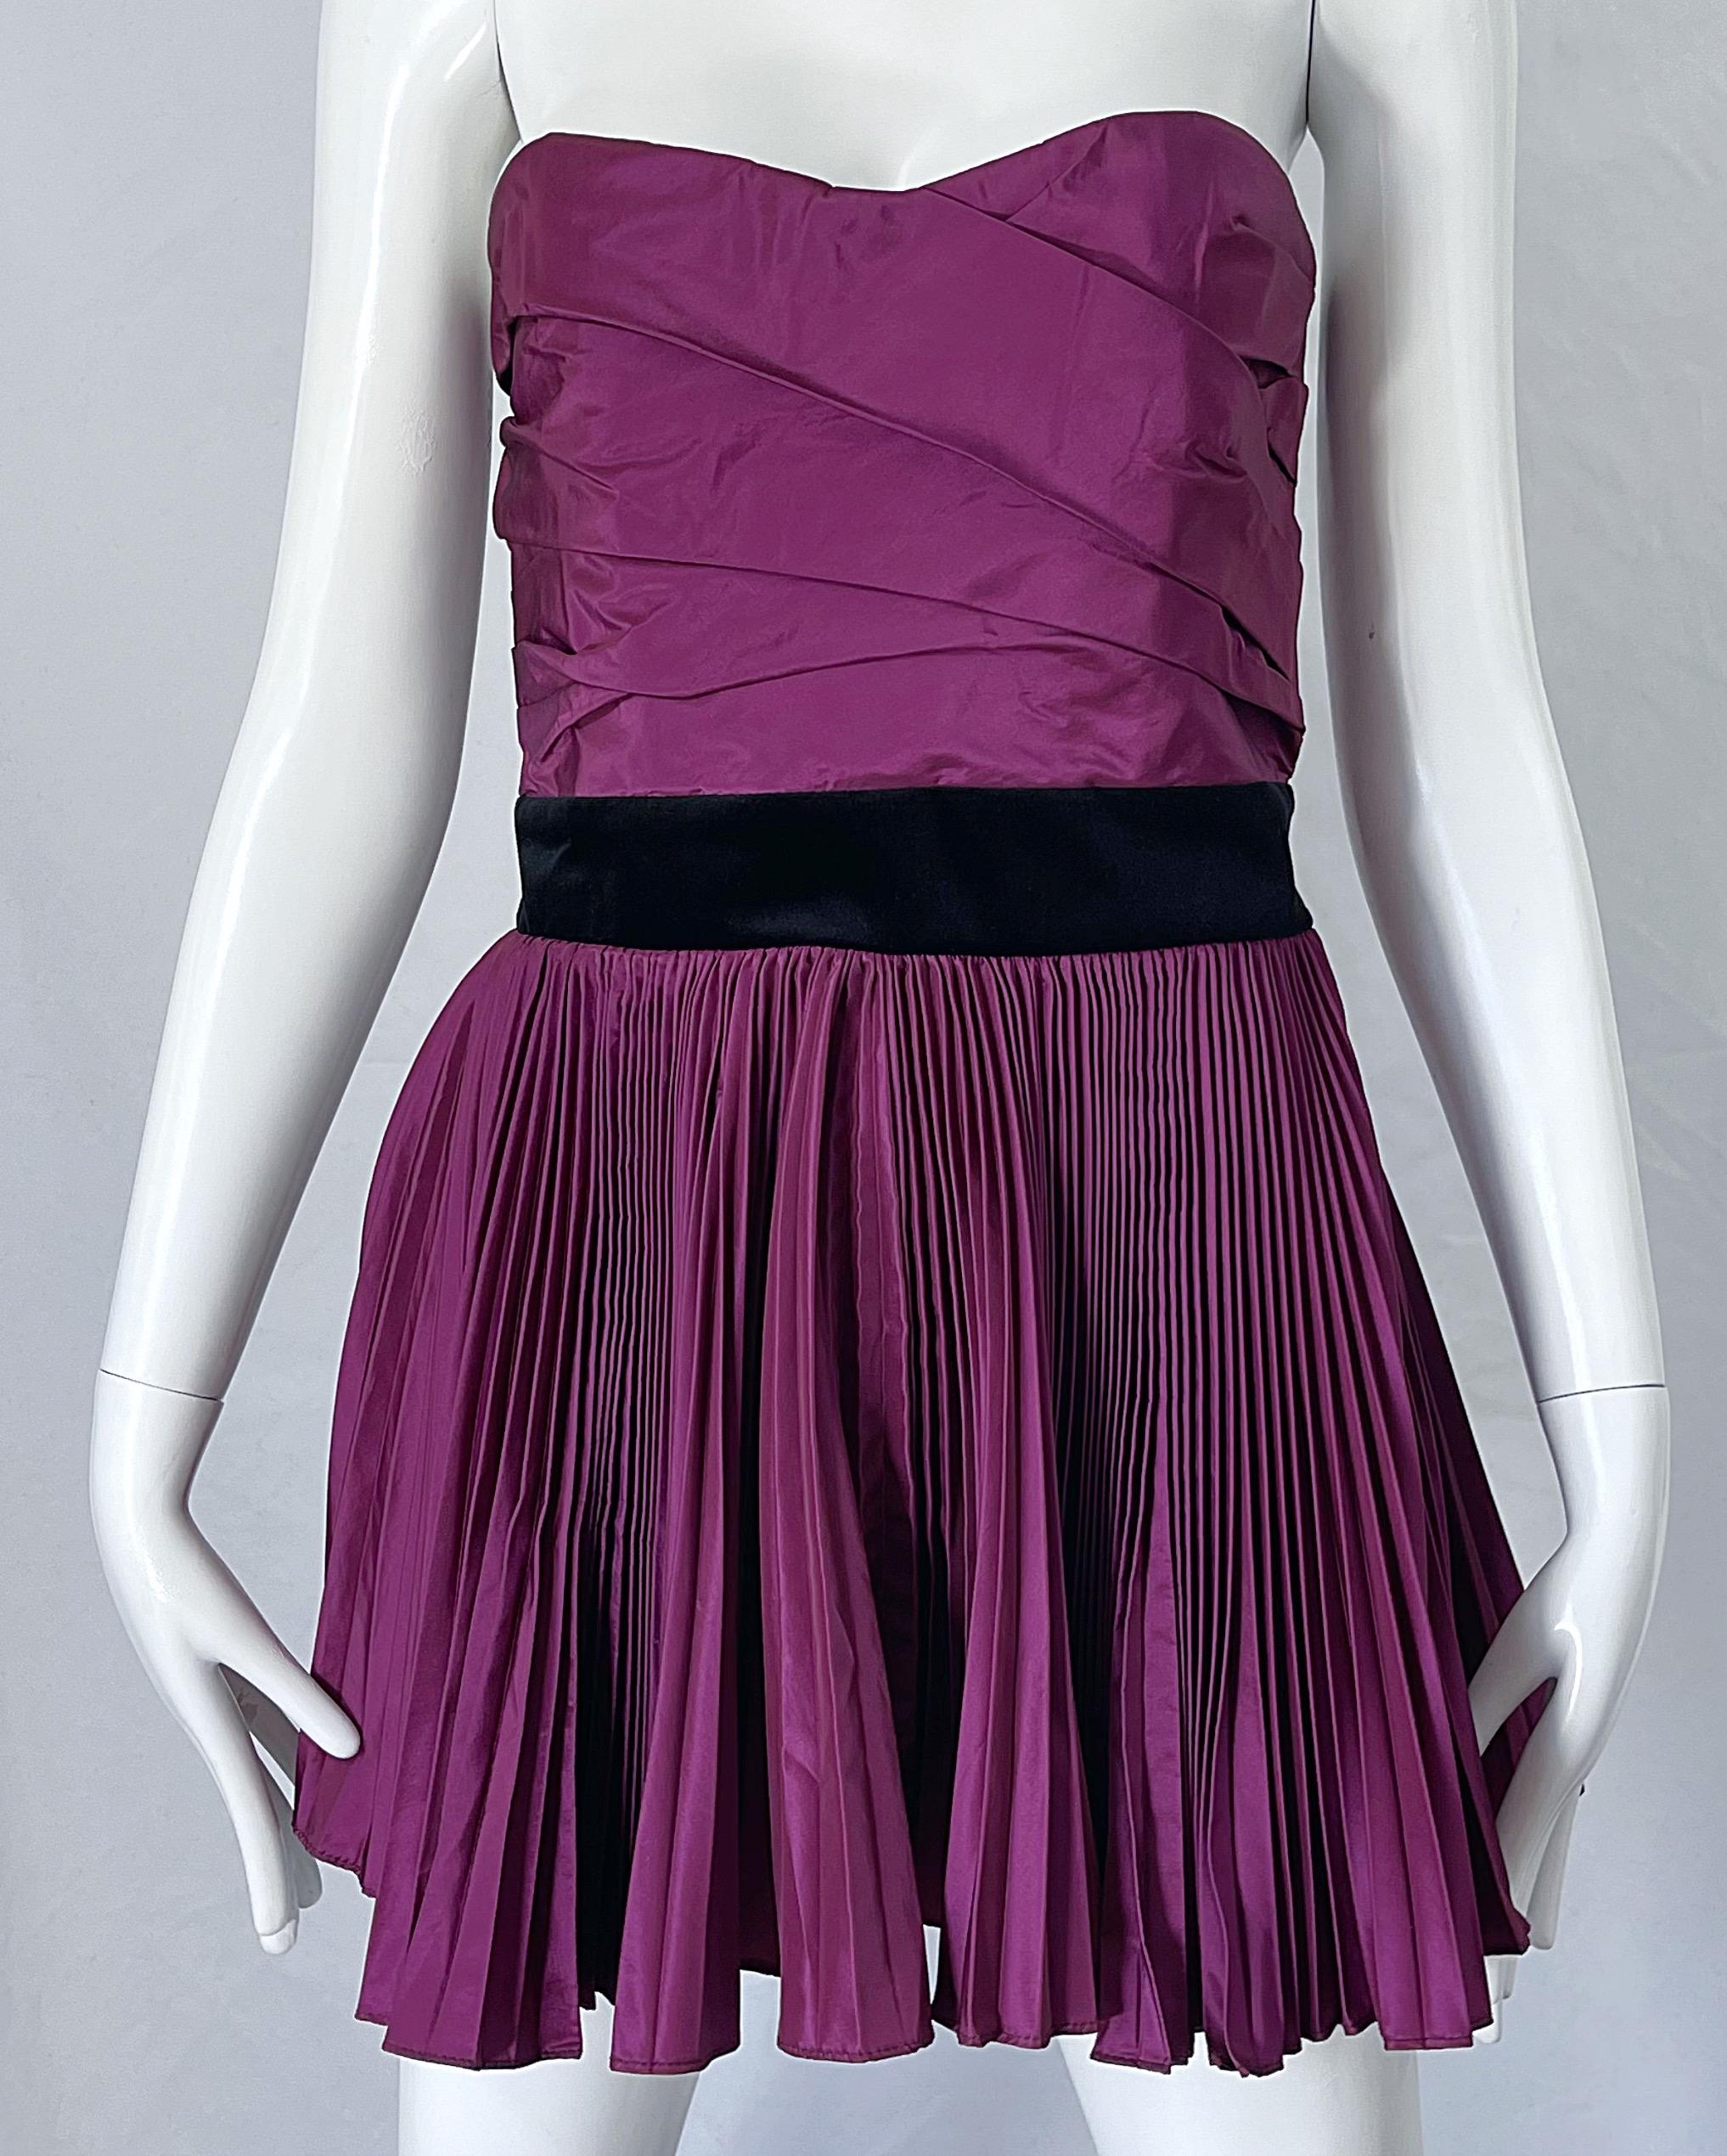 Yves Saint Laurent S/S 2012 Stefano Pilati Purple Silk Taffeta Mini Dress or Top For Sale 1